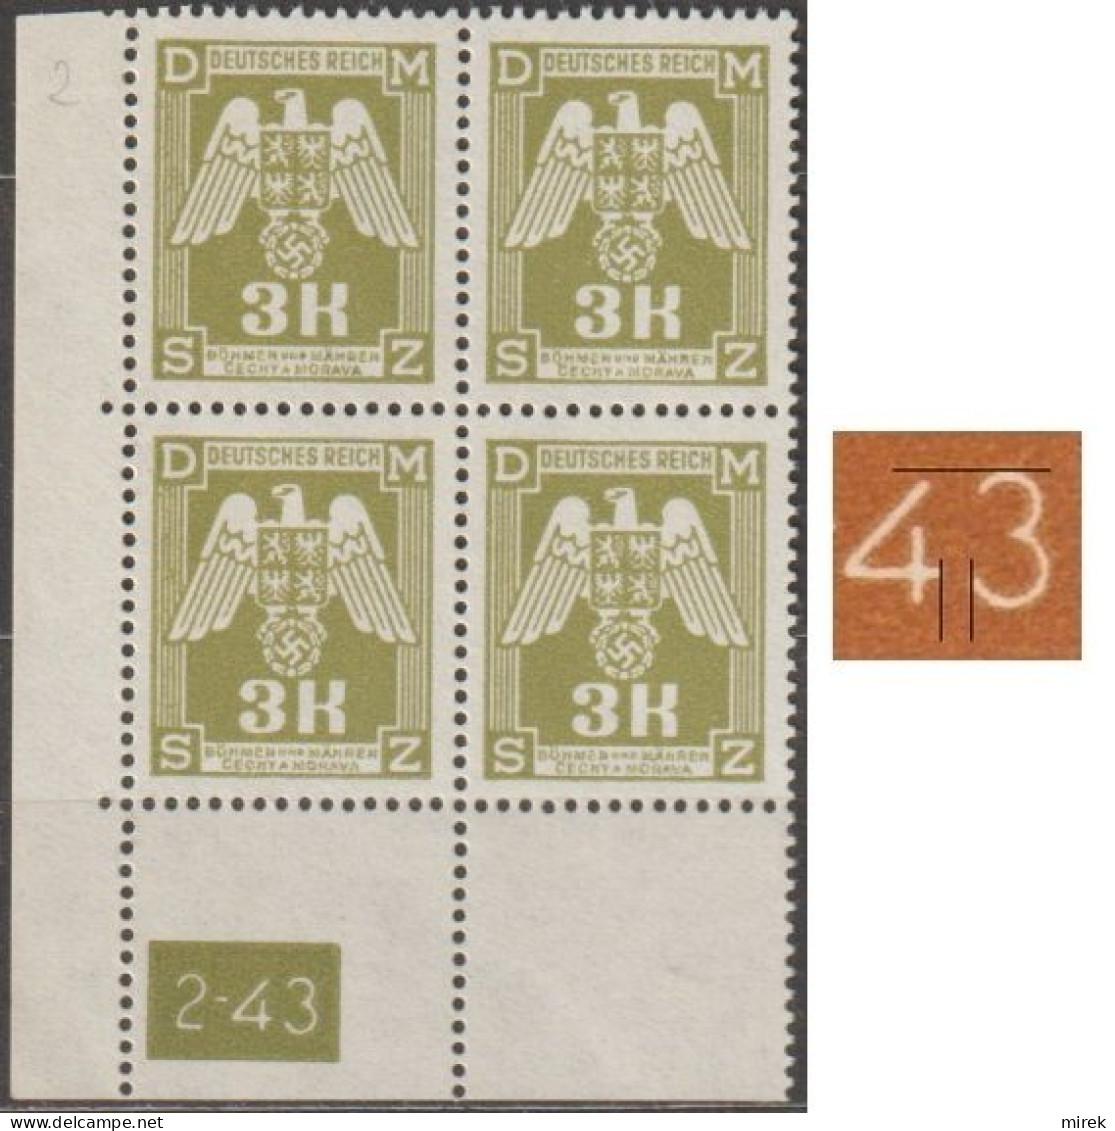 057/ Pof. SL 22, Corner Stamps, Plate Number 2-43, Type 2, Var. 2 - Ungebraucht